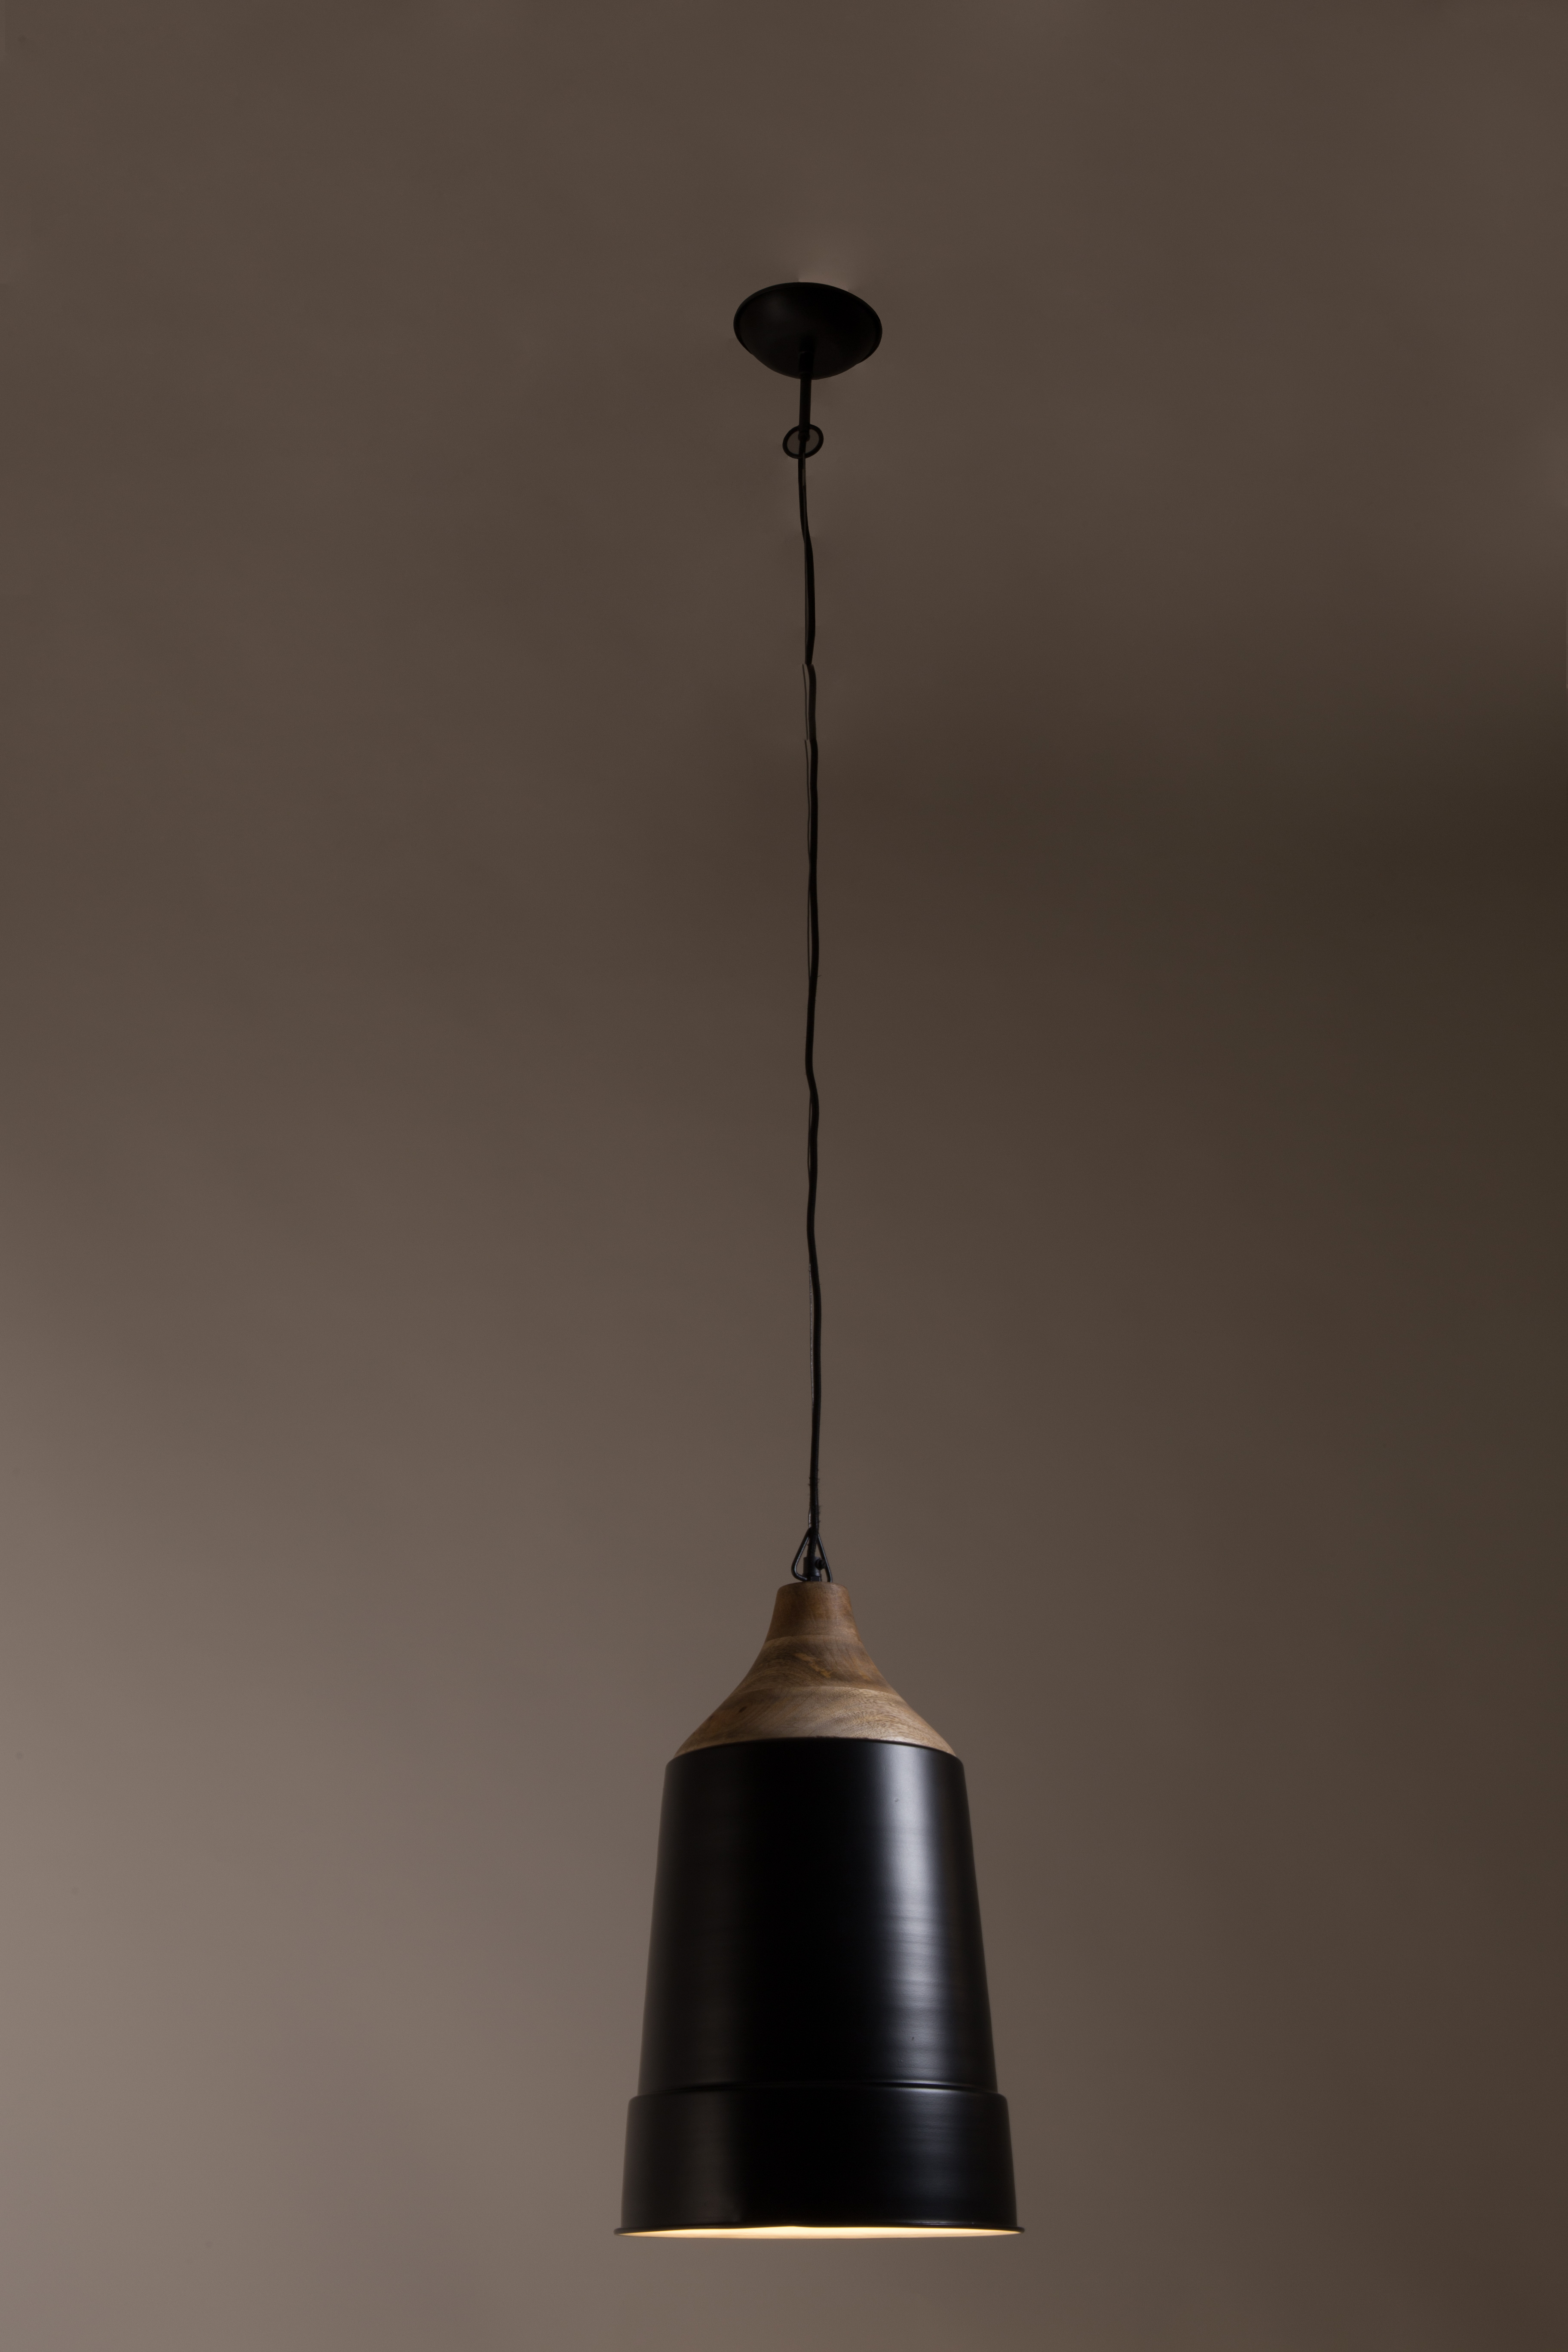 verband Tactiel gevoel portemonnee Dutchbone Wood Top Pendant Lamp – WortelWoods